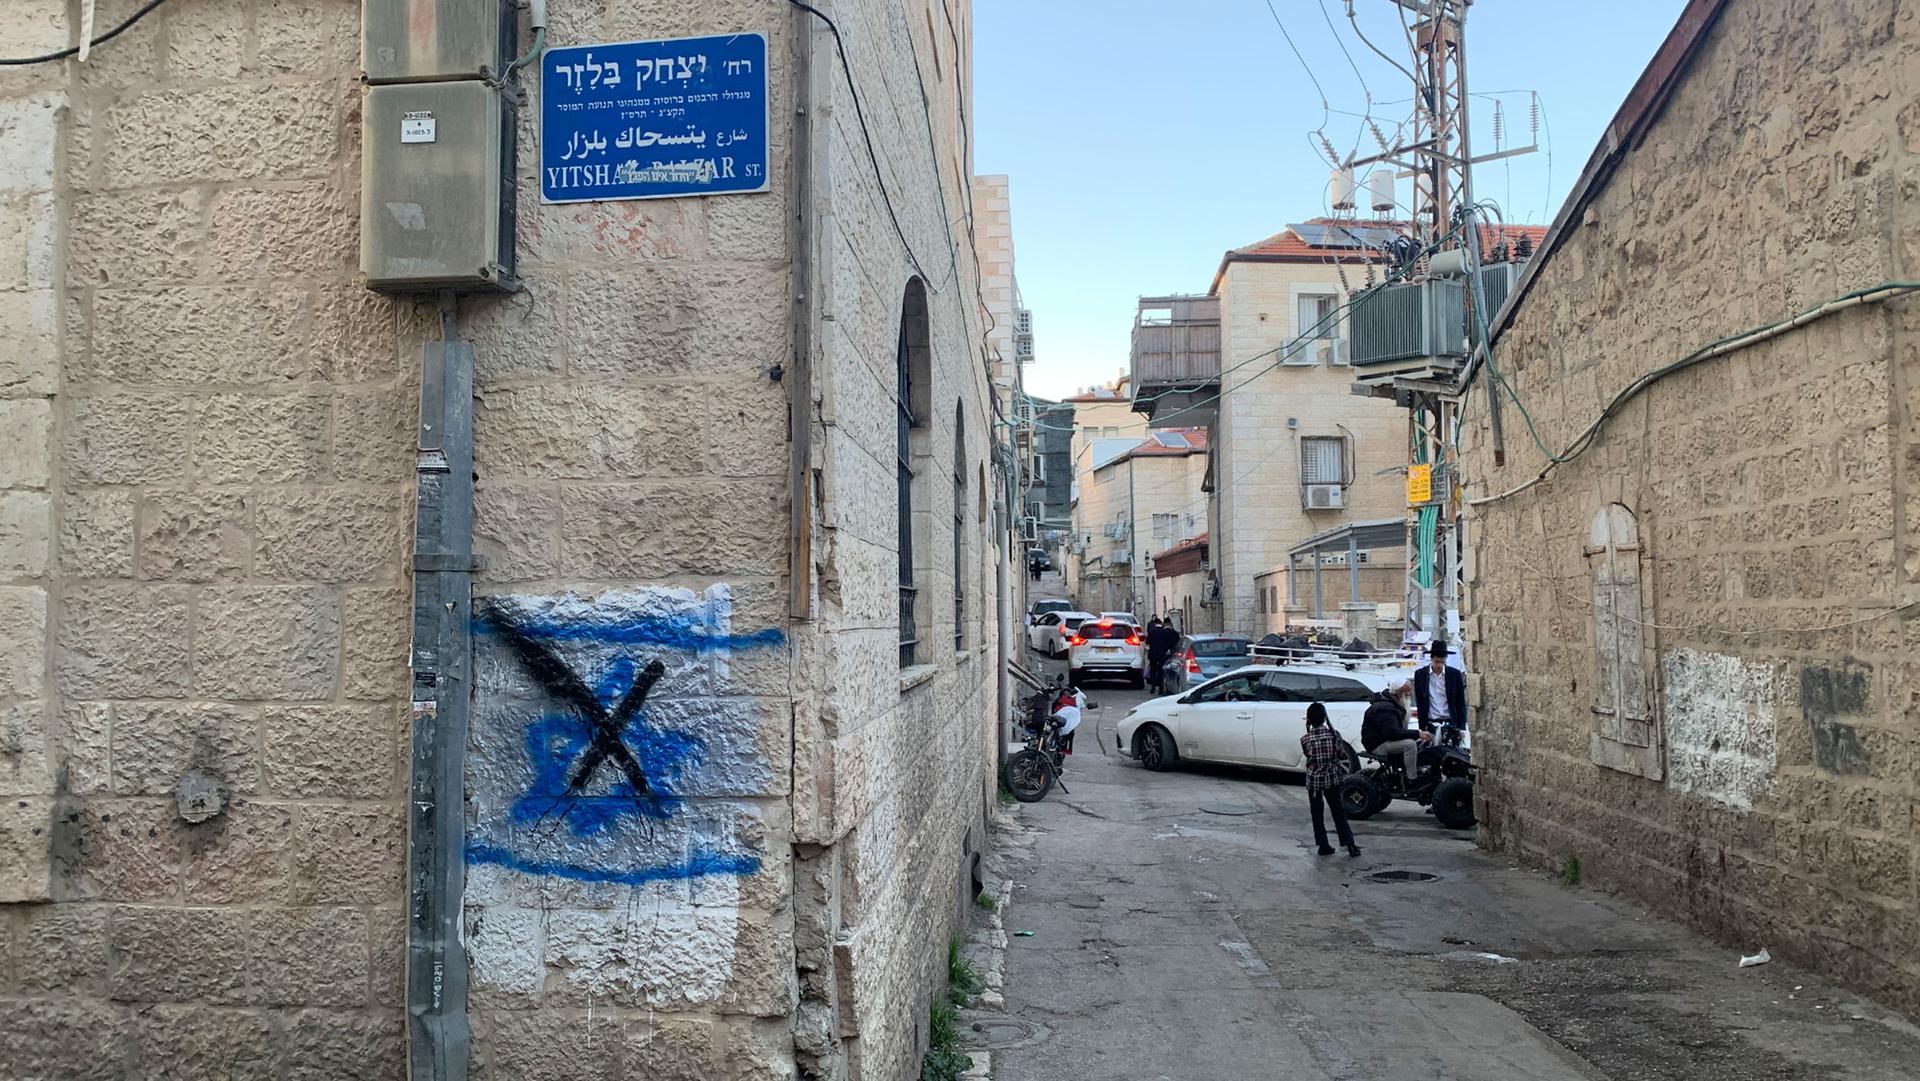 Anti-Zionist graffiti on the side of a building in Mea She'arim, a neighborhood of Jerusalem.